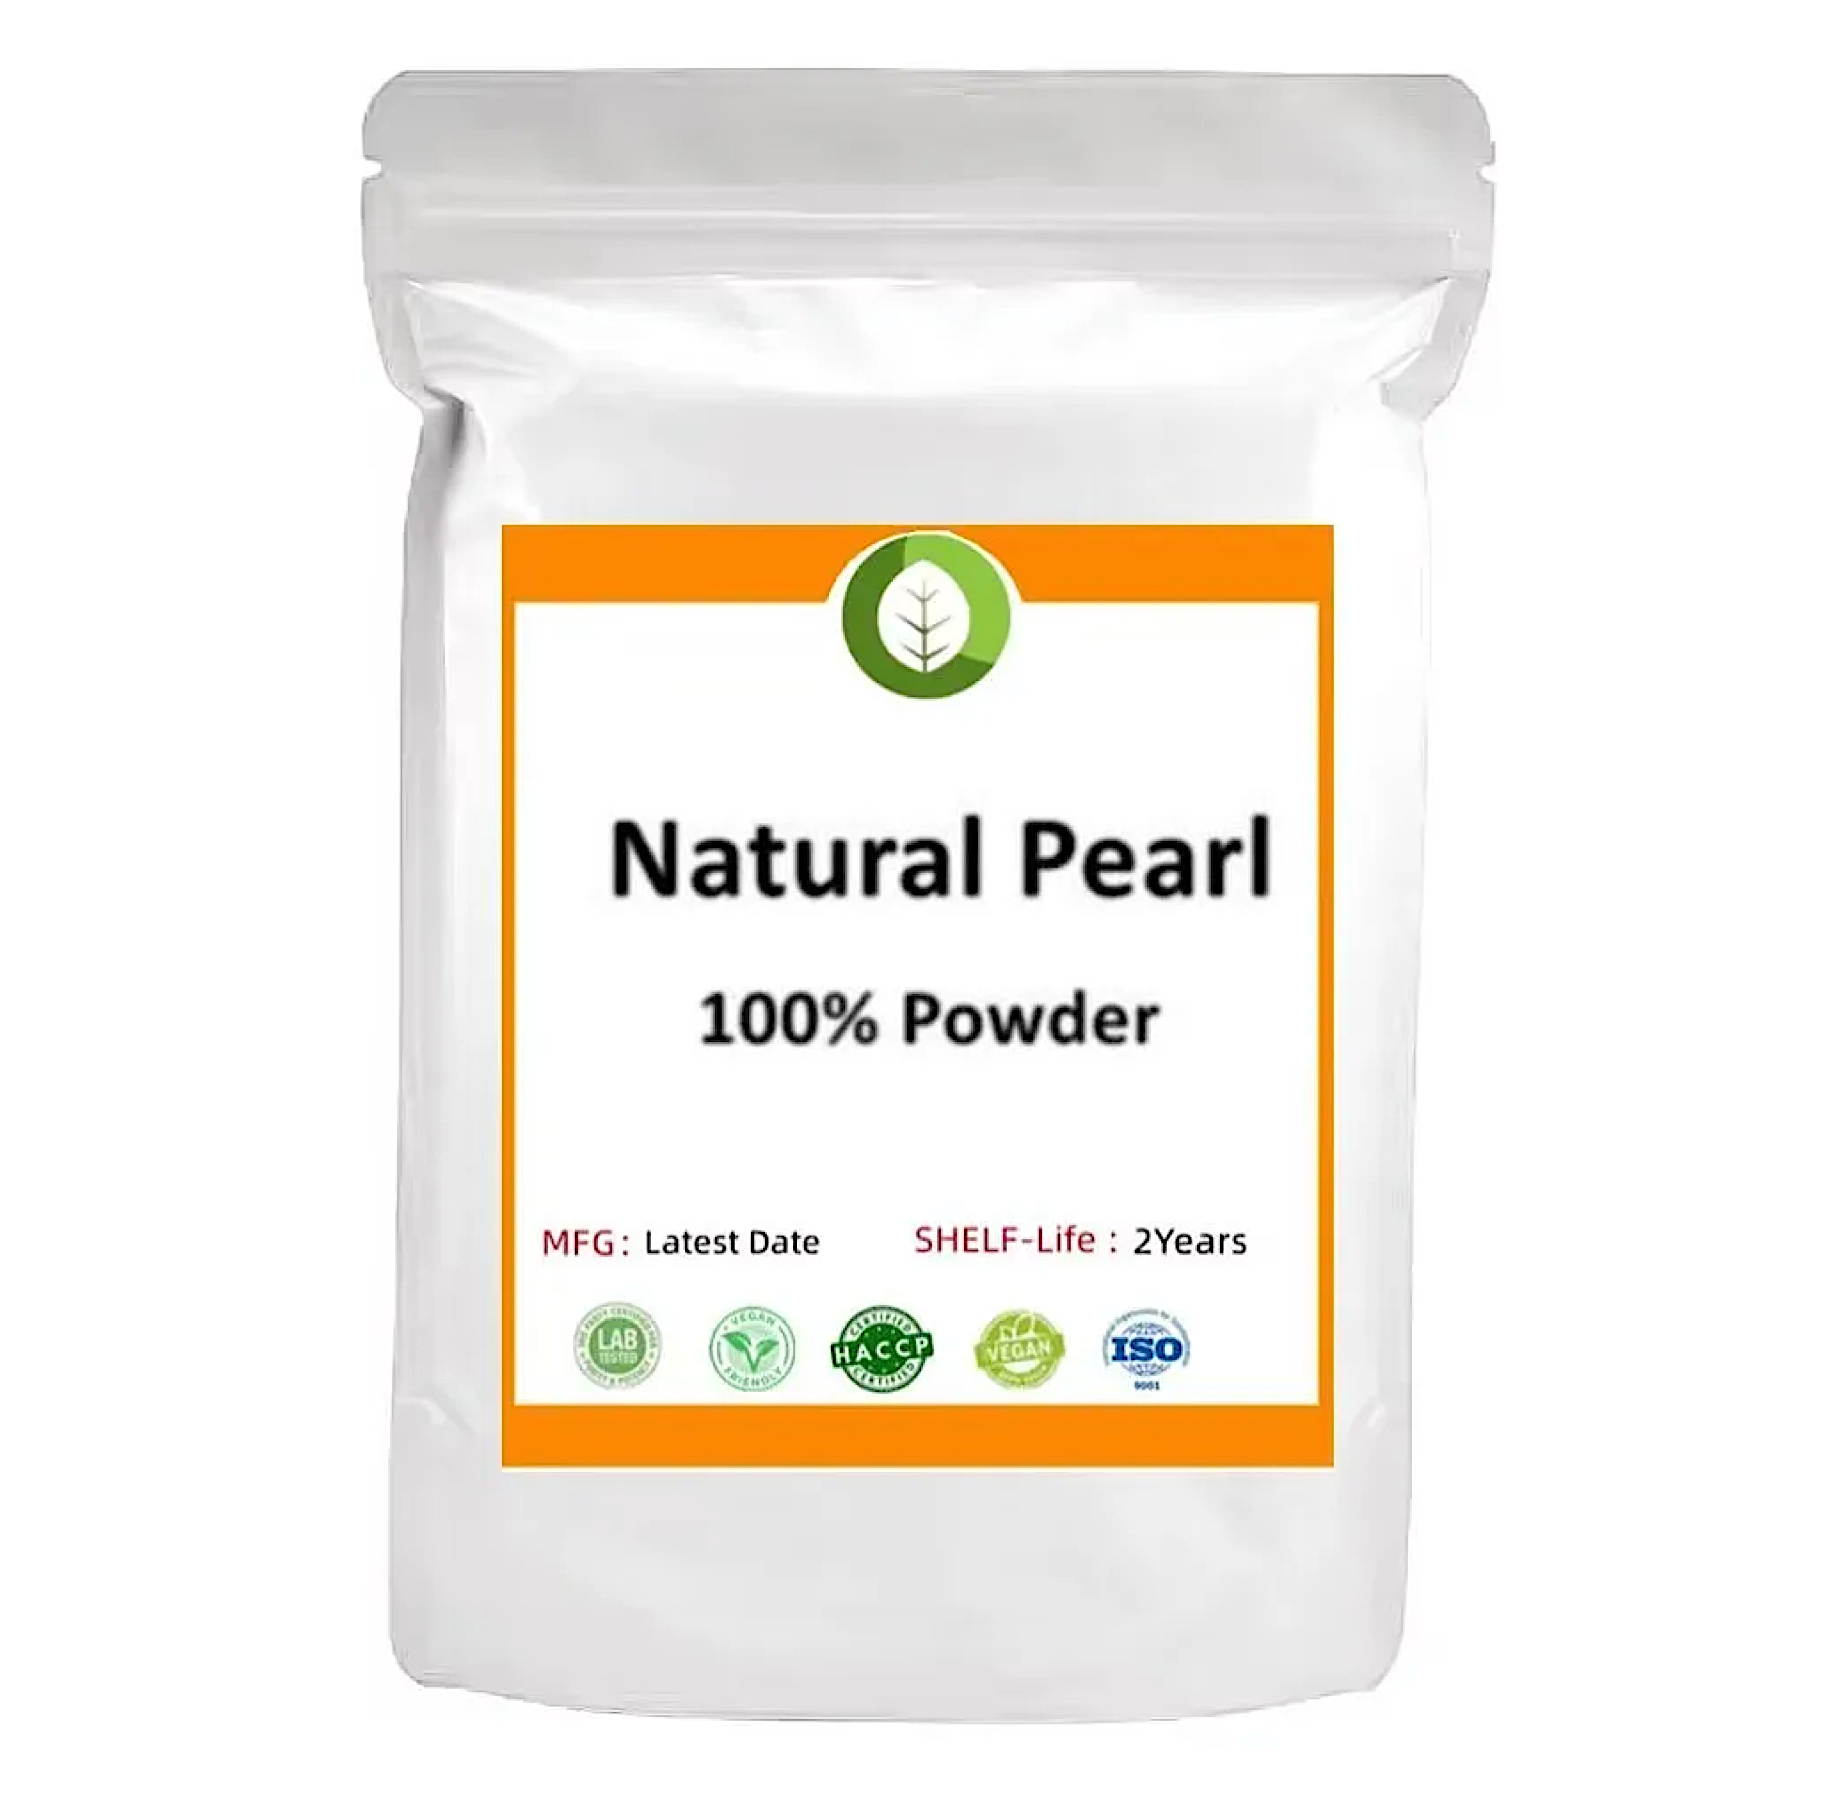 Natural Pearl Powder